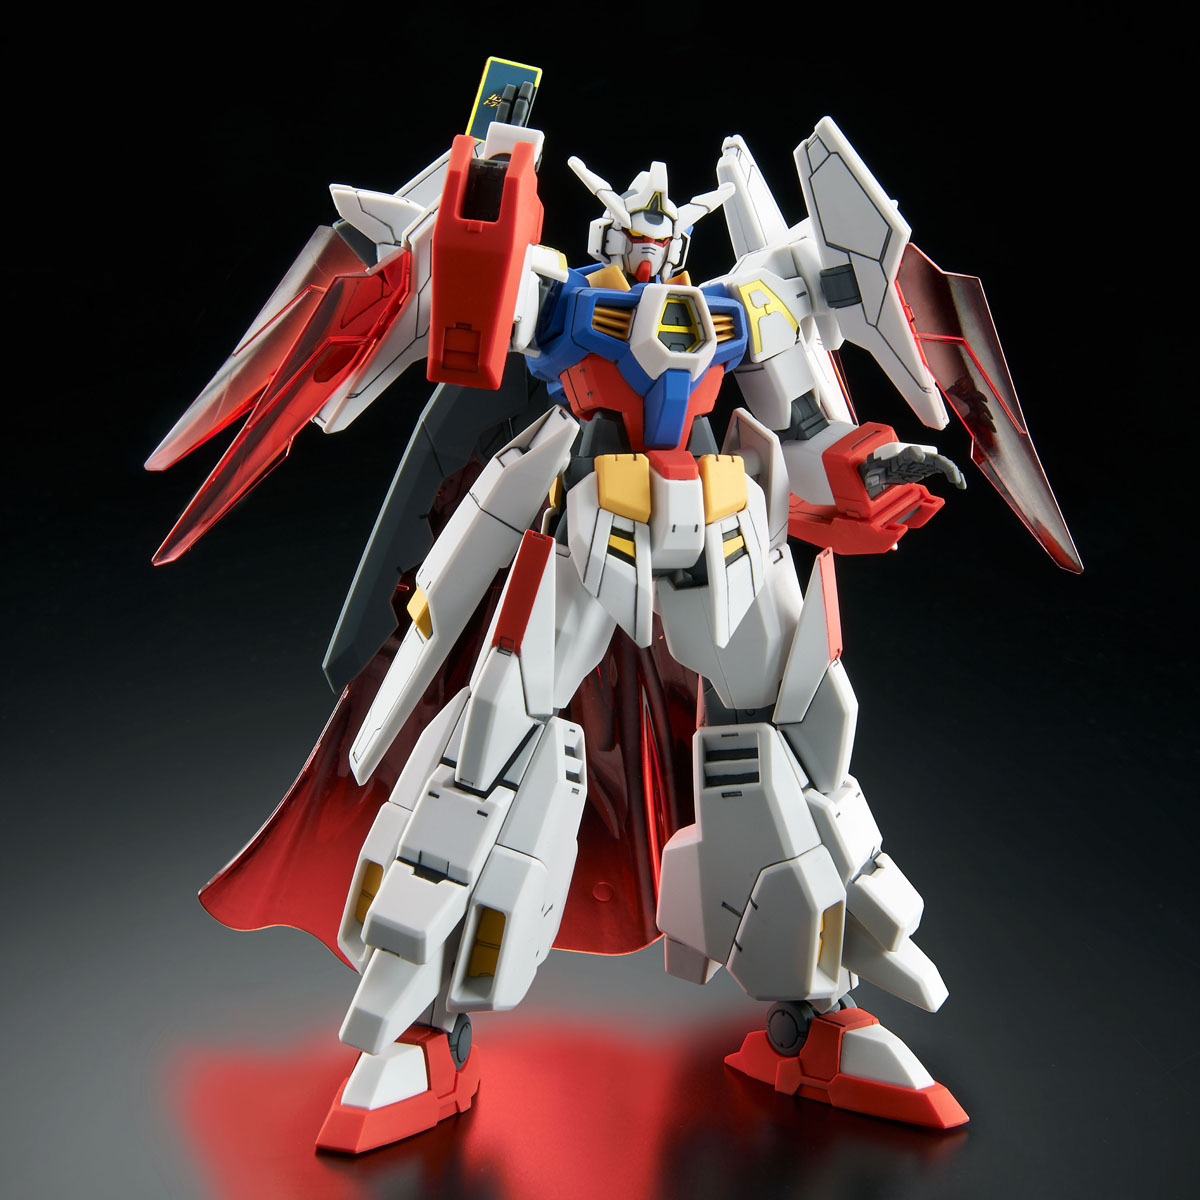 Hg 1 144 Try Age Gundam Gundam Premium Bandai Usa Online Store For Action Figures Model